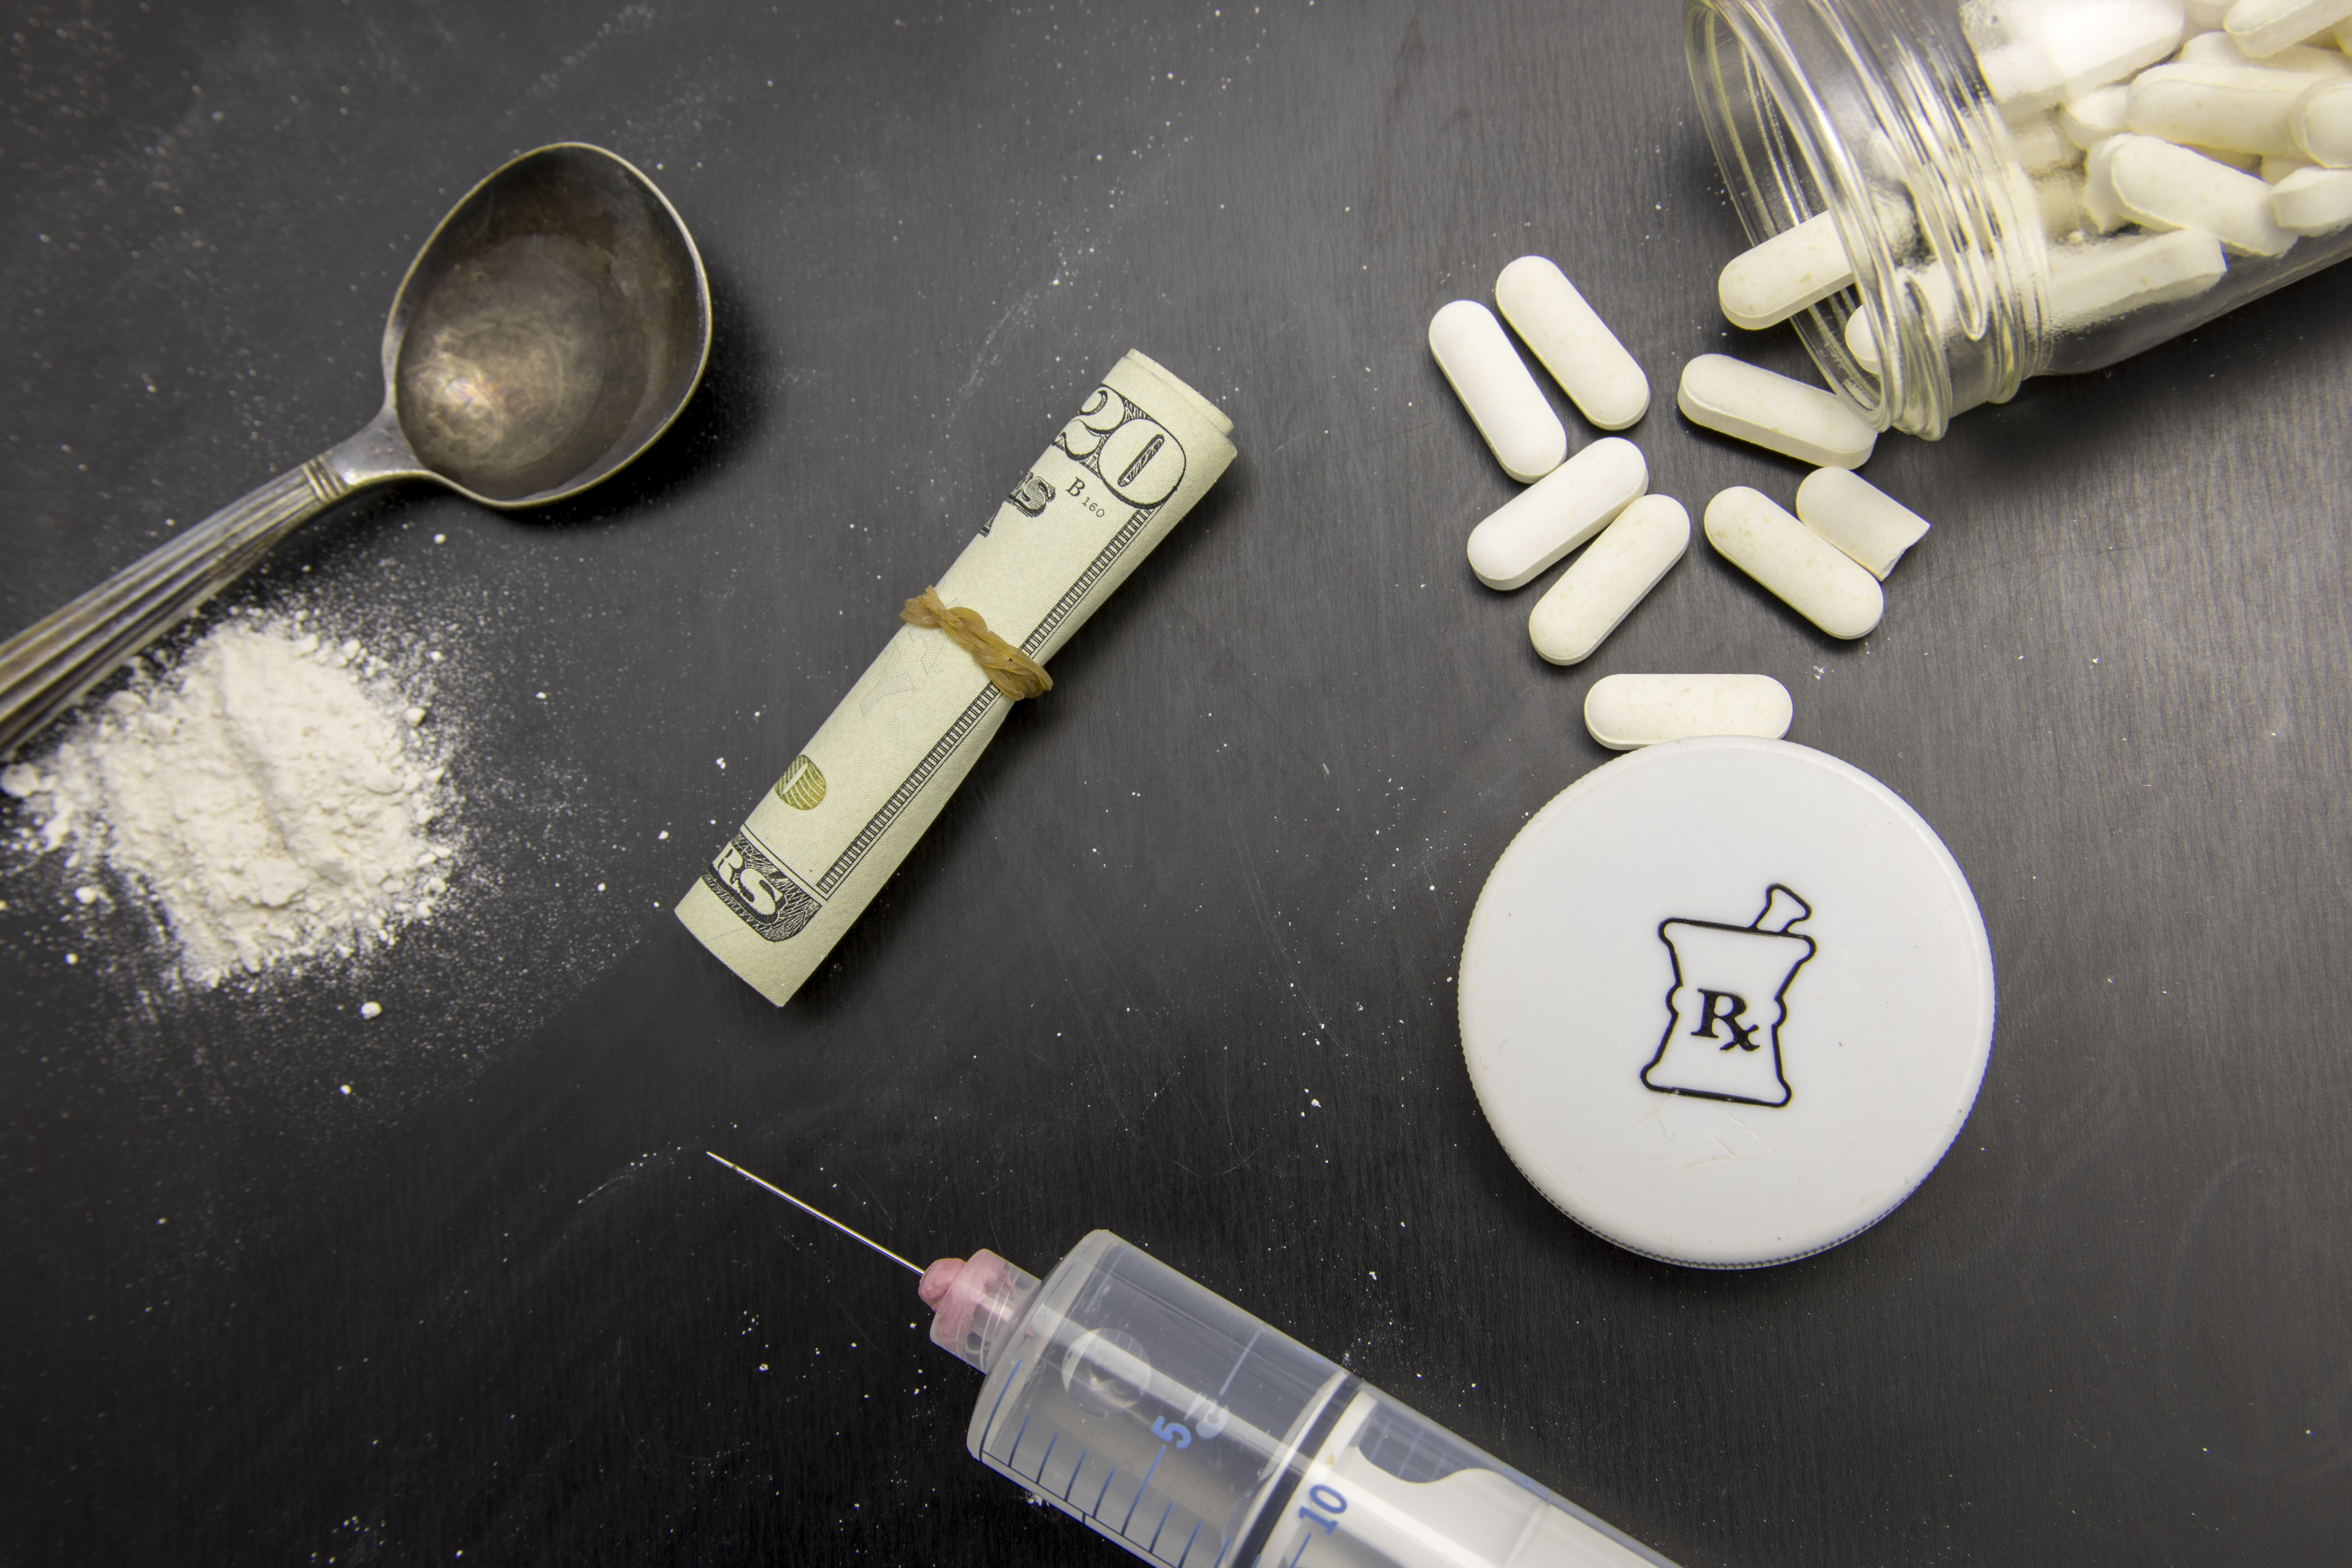 Opiods in pill, powder and syringe on chalkboard with rolled twenty dollar bills. (Shutterstock/ karenfoleyphotography)